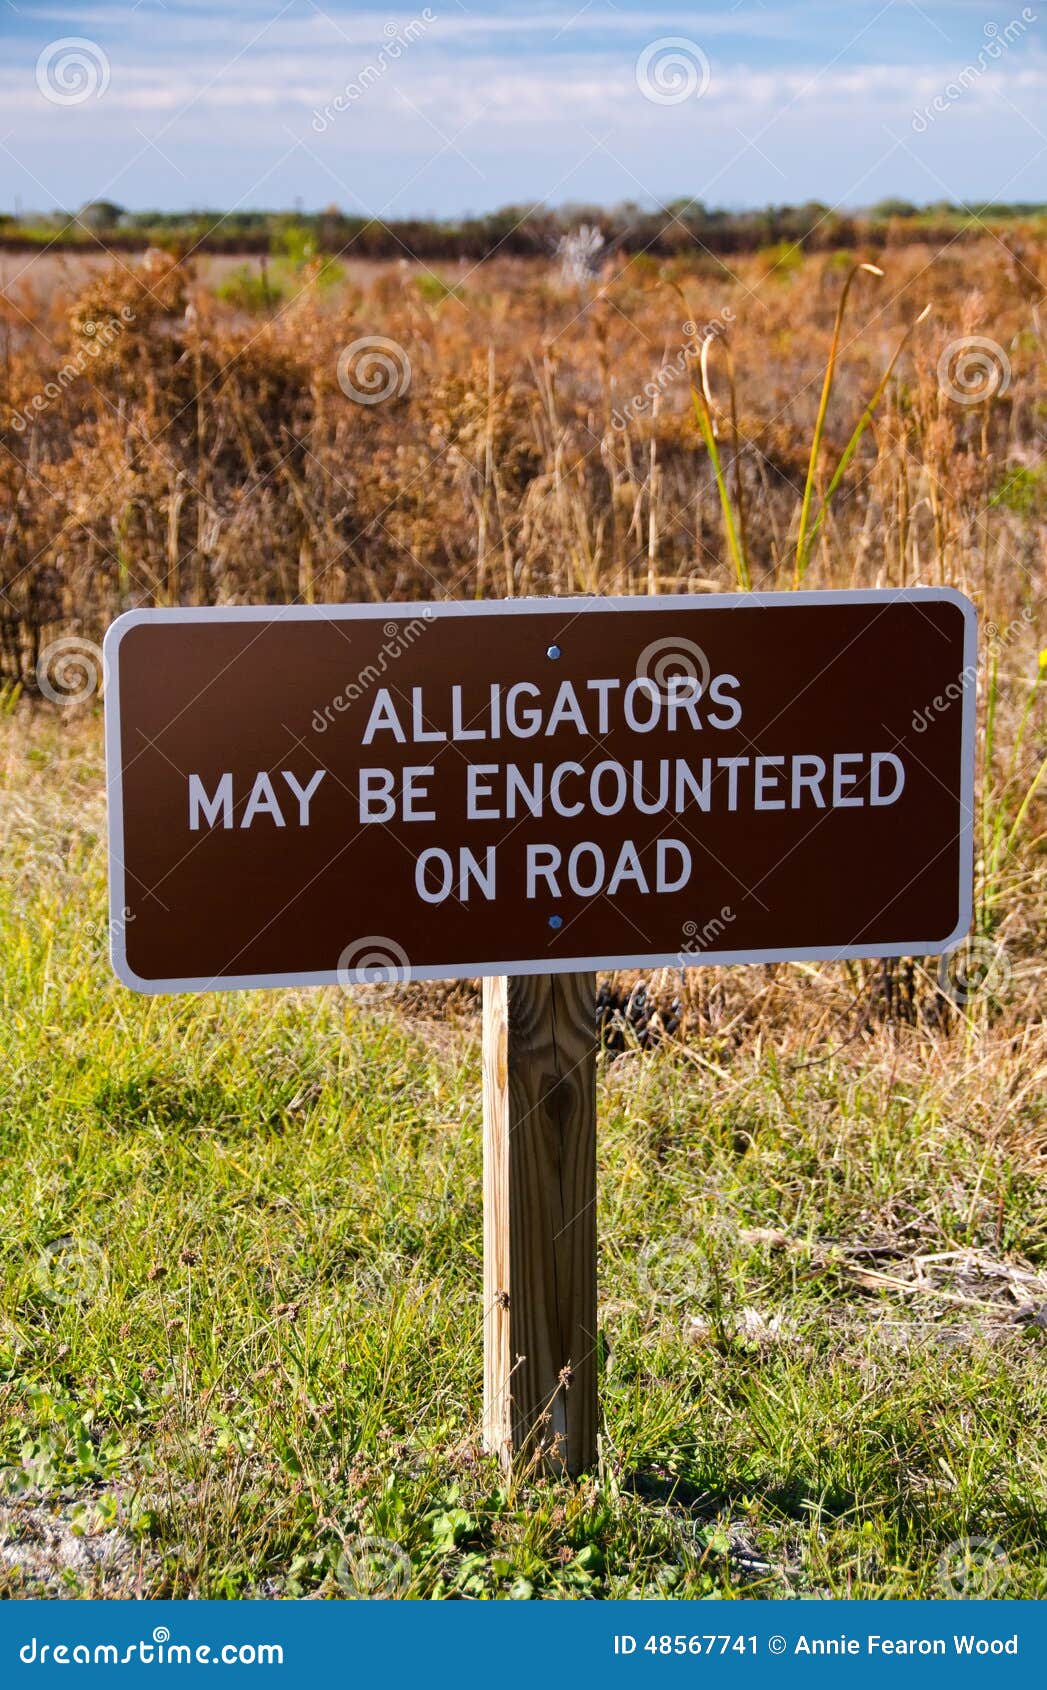 image-alligators-may-be-encountered-road-sign-warning-kissimmee-prairie-state-park-florida-48567741.jpg